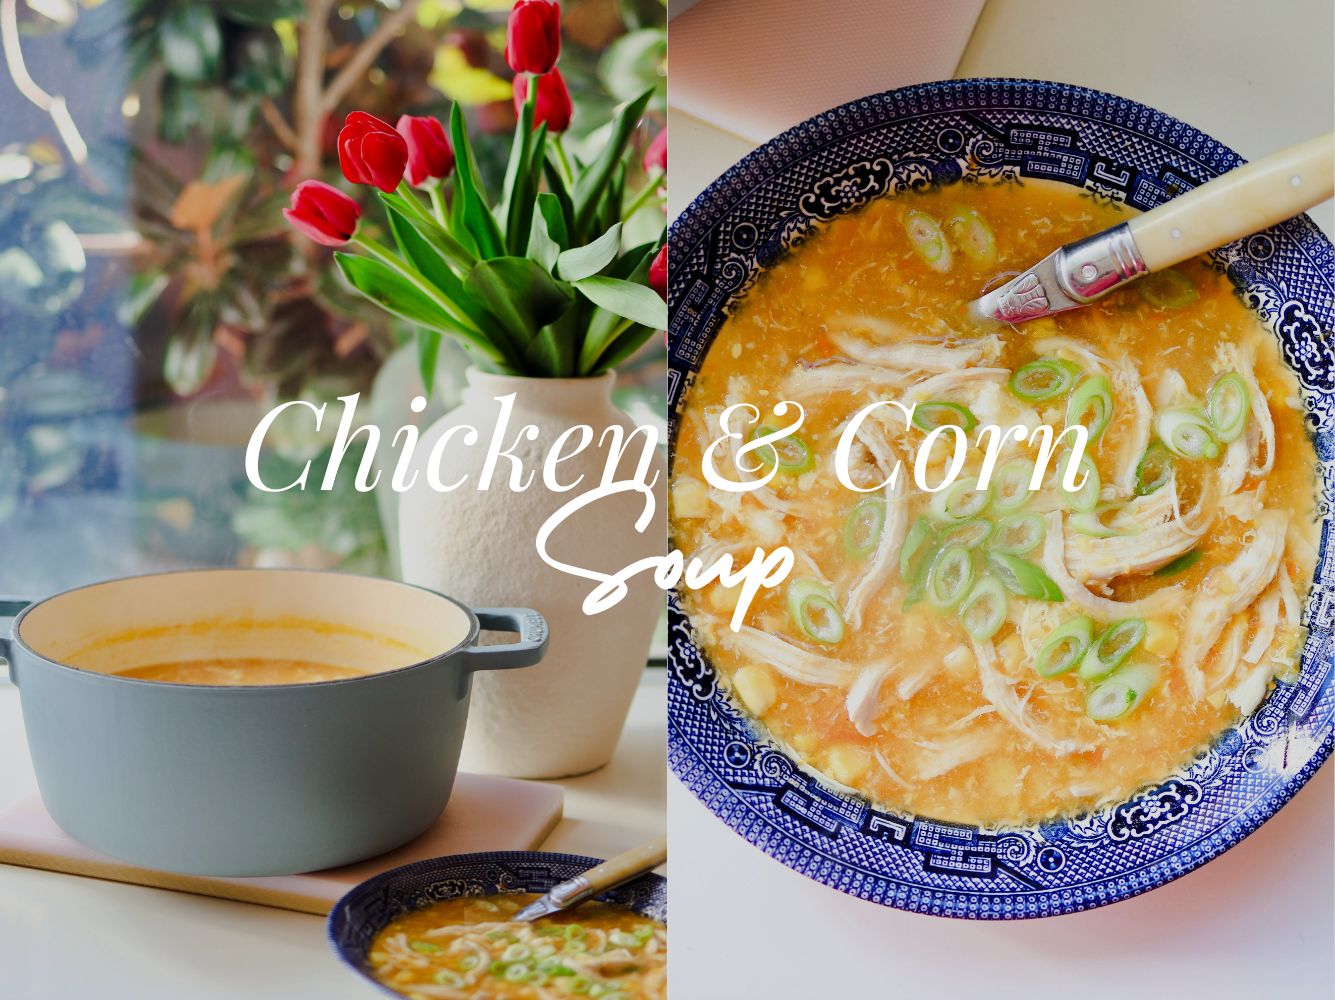 Chicken & Corn Soup